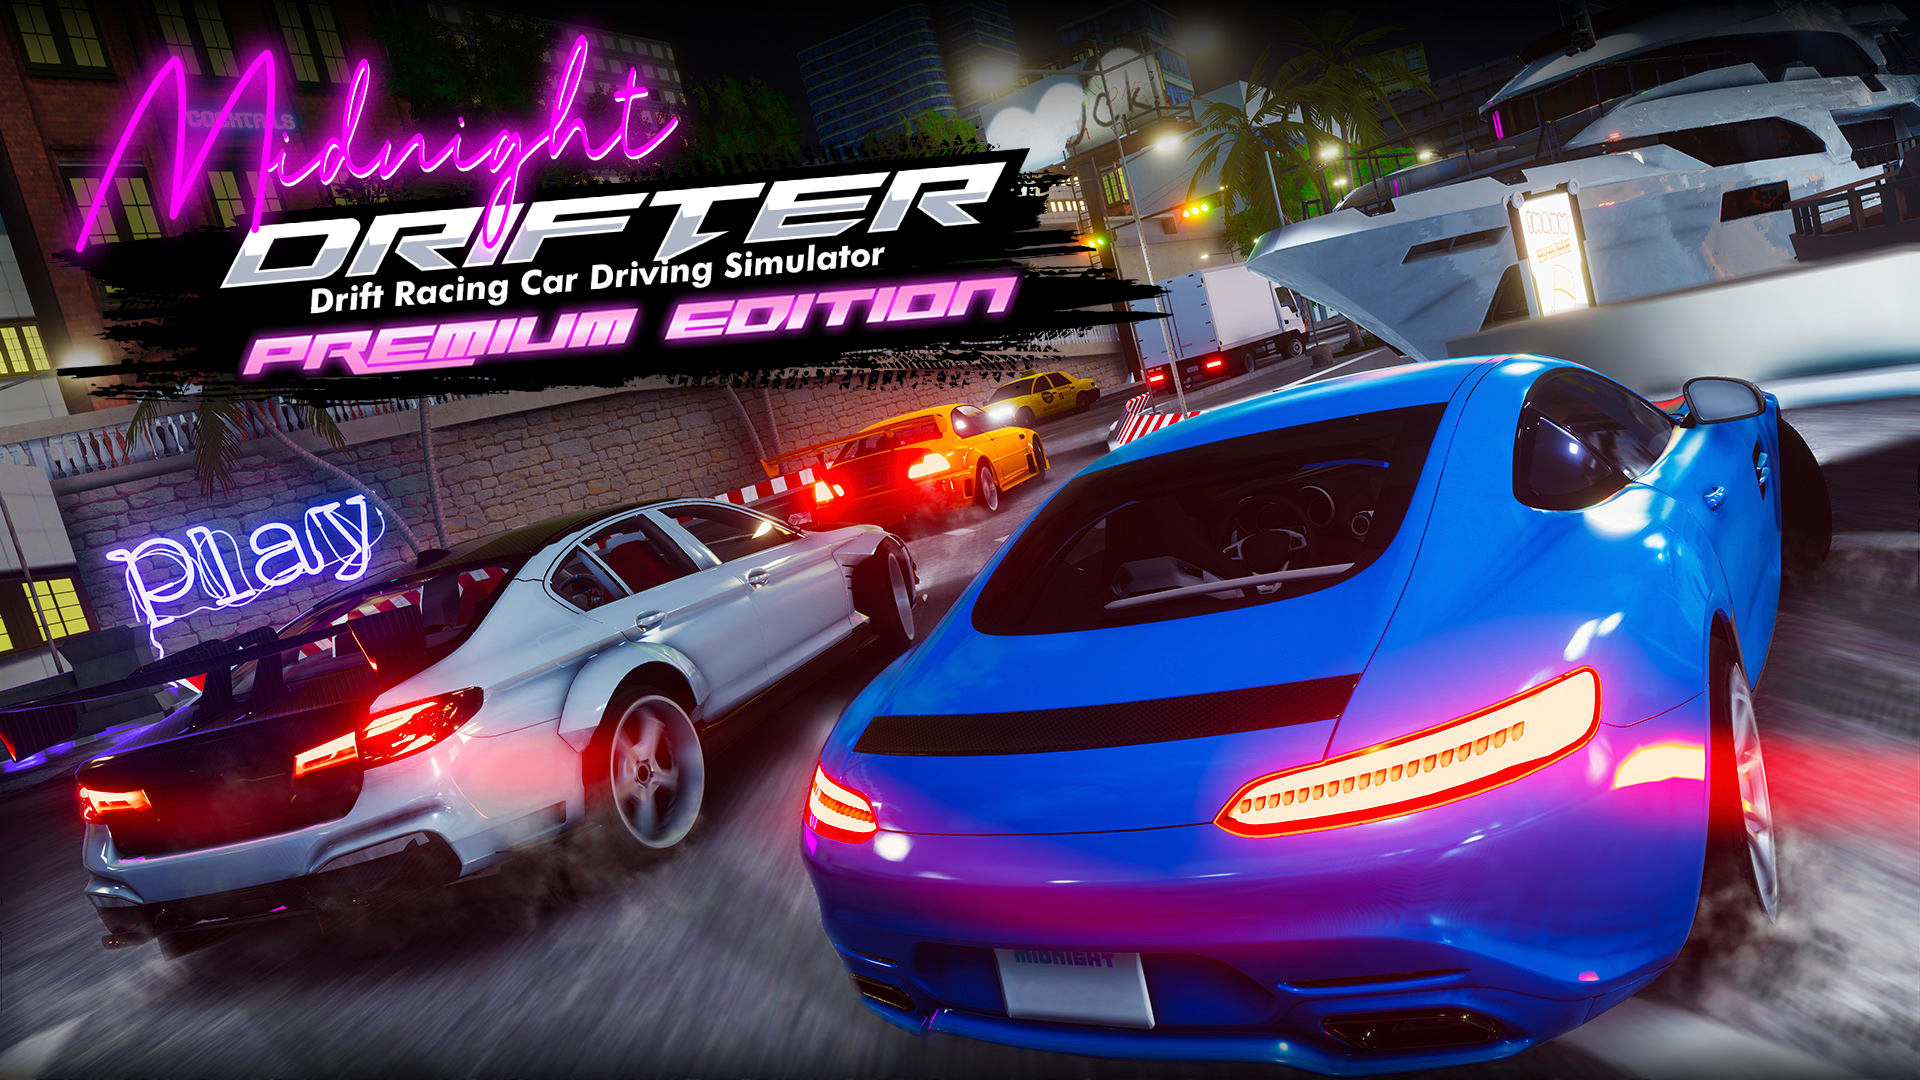 Midnight Drifter-Drift Racing Car Racing Driving Simulator - PREMIUM EDITION 1